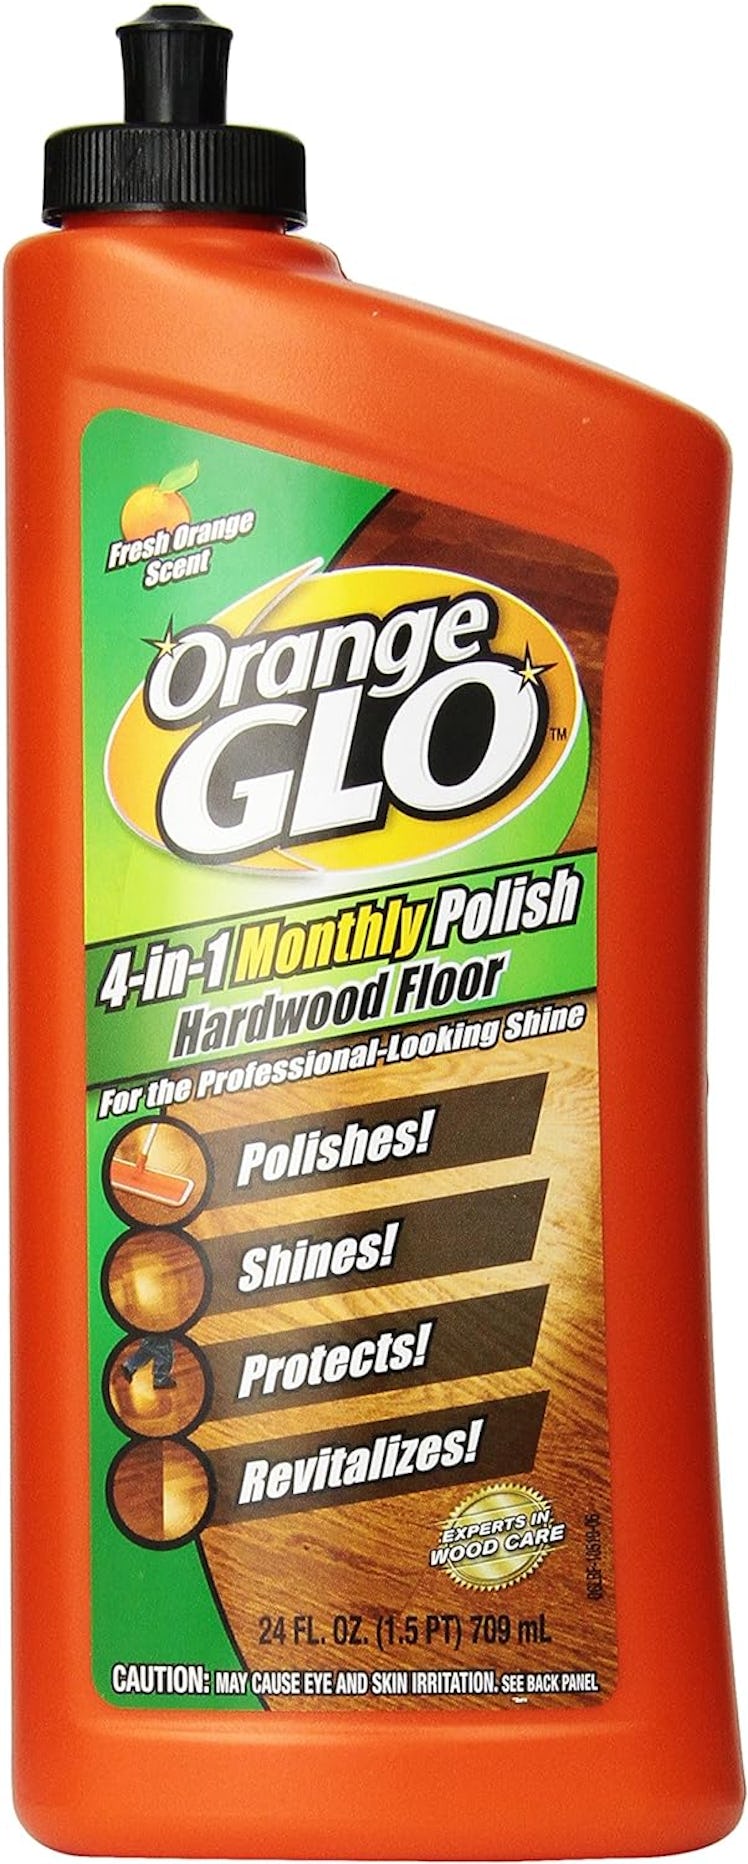 Orange Glo Hardwood Floor 4-in-1 Monthly Polish (2-Pack)